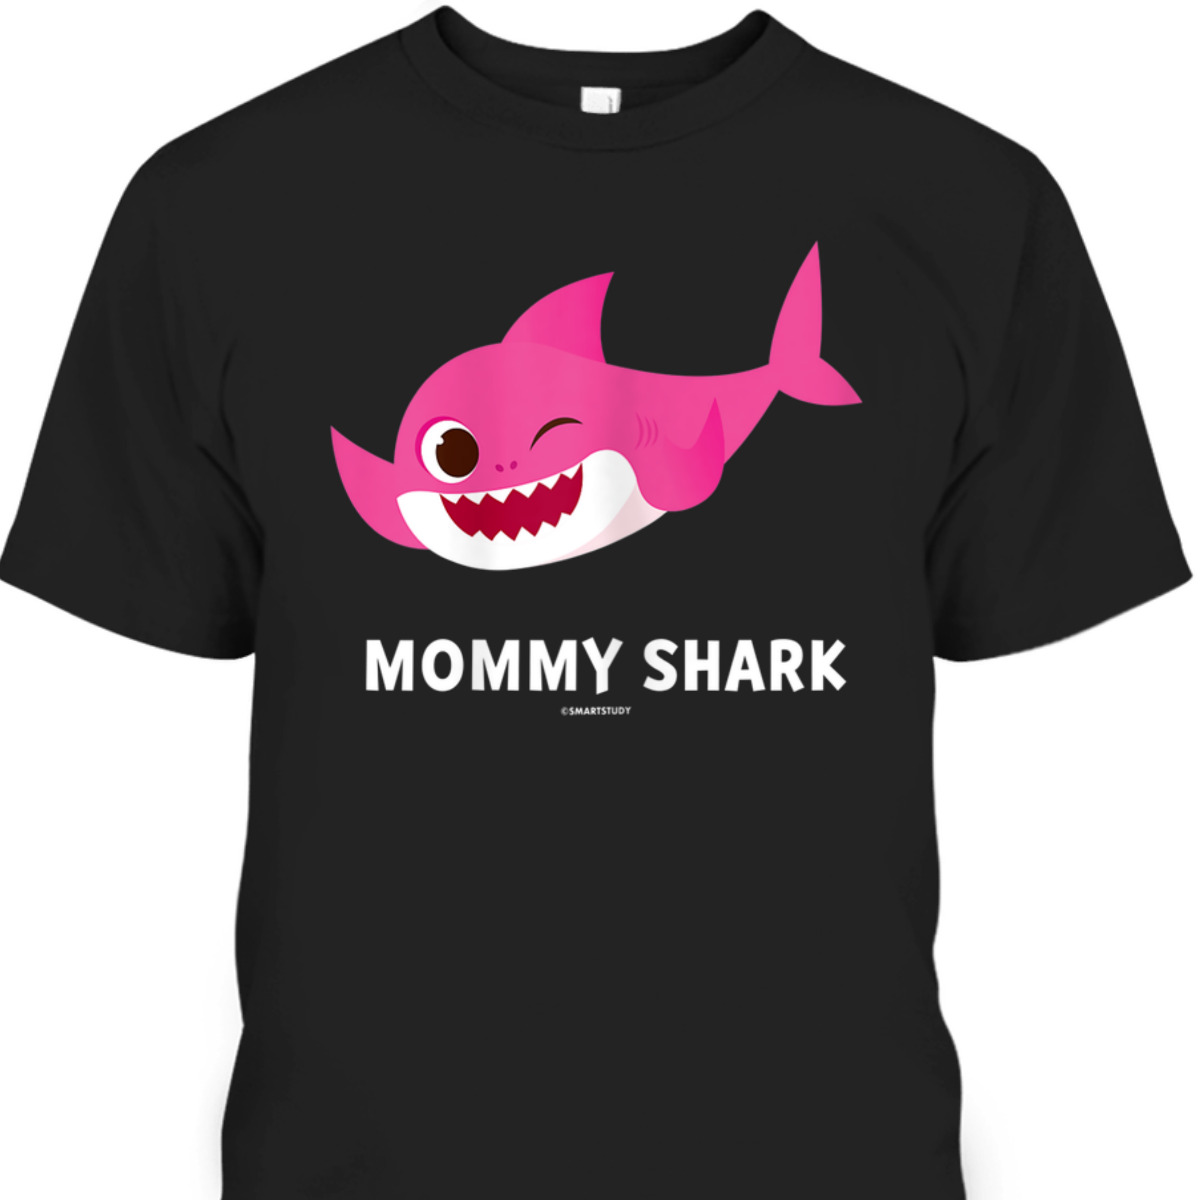 Mommy Shark Mother's Day T-Shirt Best Gift For New Mom